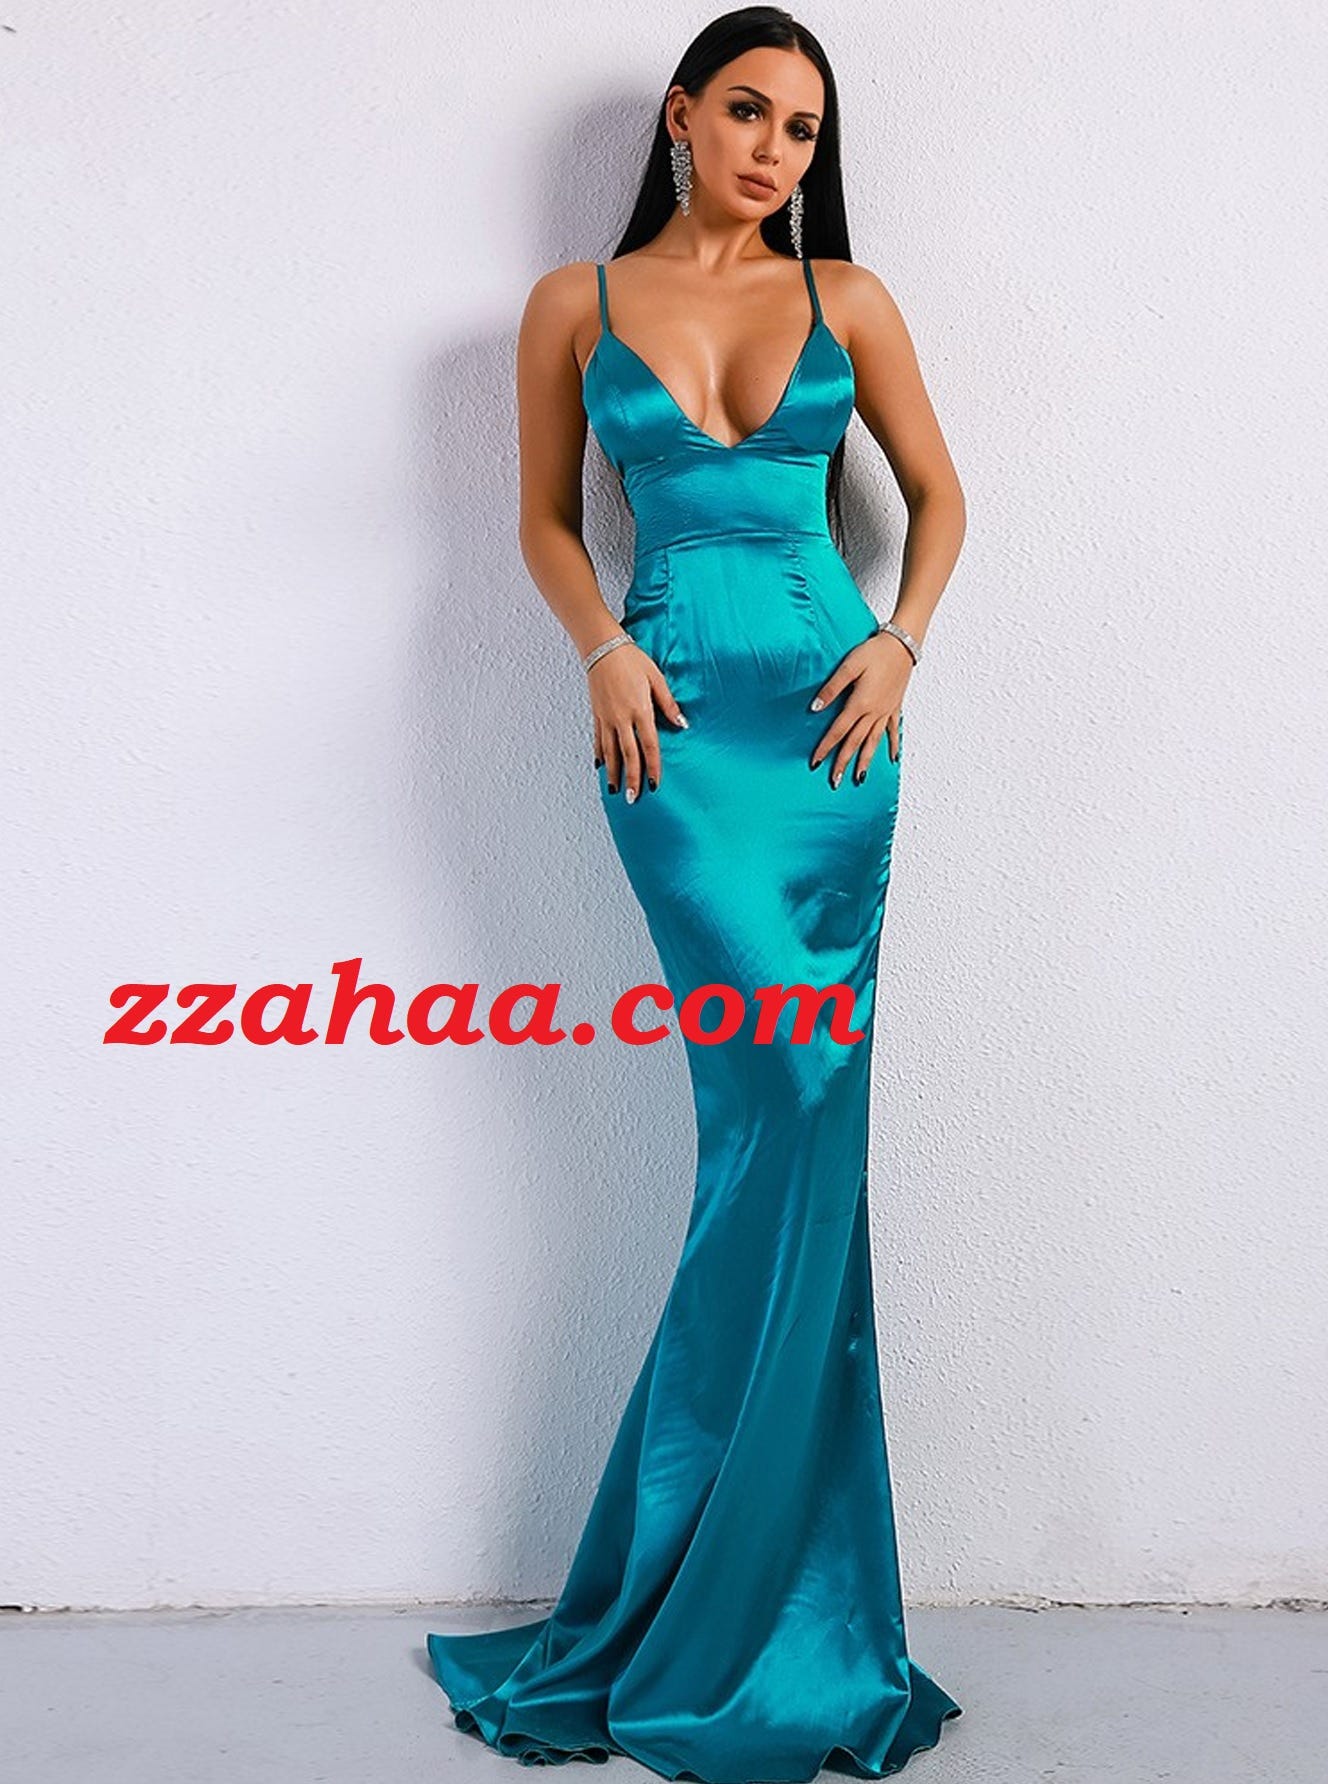 Luxury evening gowns online - zzahaa - Medium